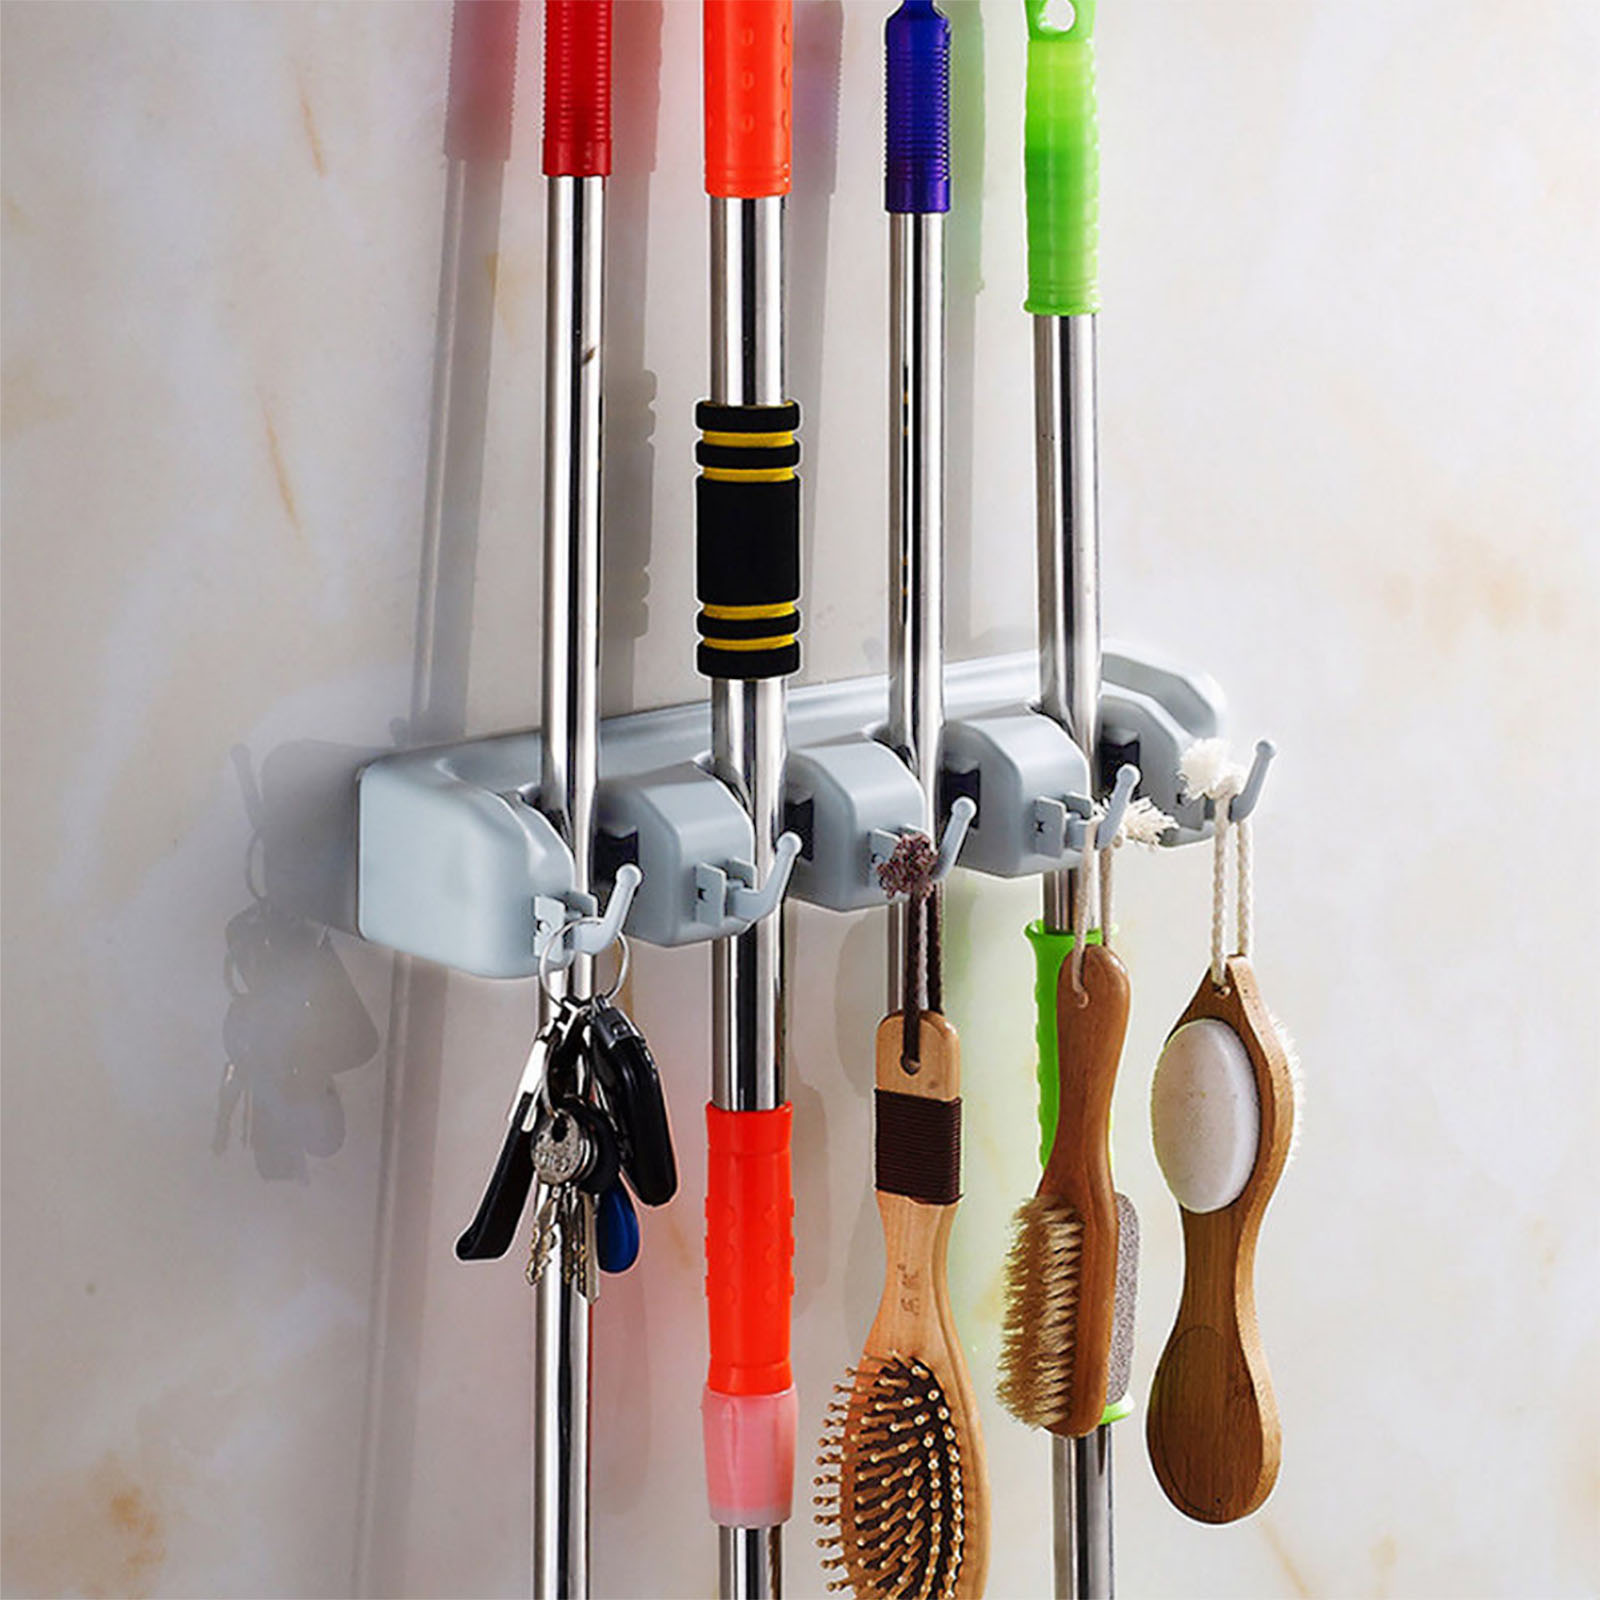 5 Position Mop Broom Organizer Wall Storage Mounted Holder Brush Hanger Rack Set | eBay